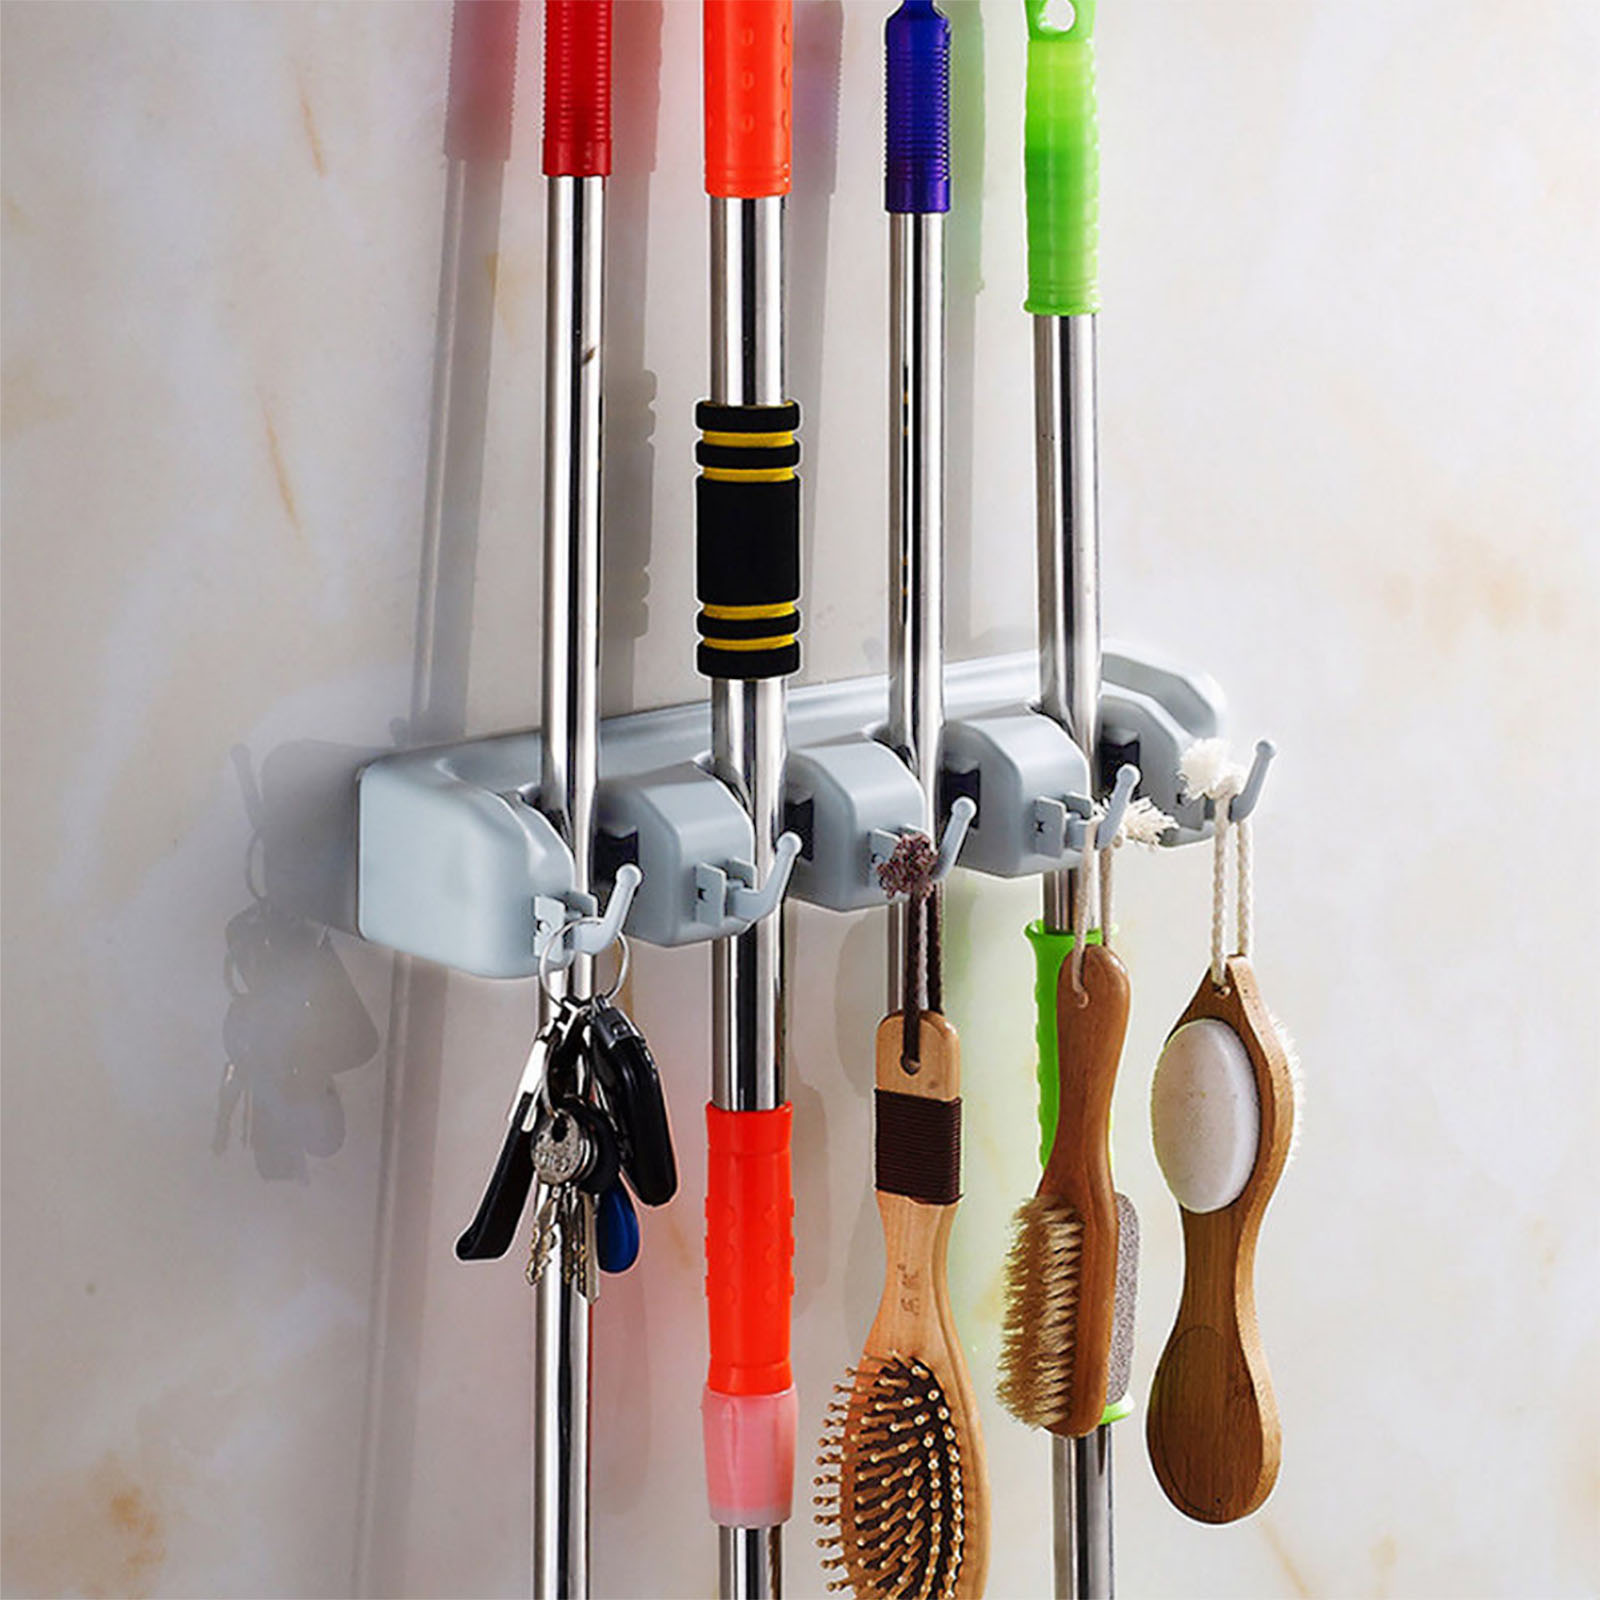 5 Position Mop Broom Organizer Wall Storage Mounted Holder Brush Hanger Rack Set | eBay